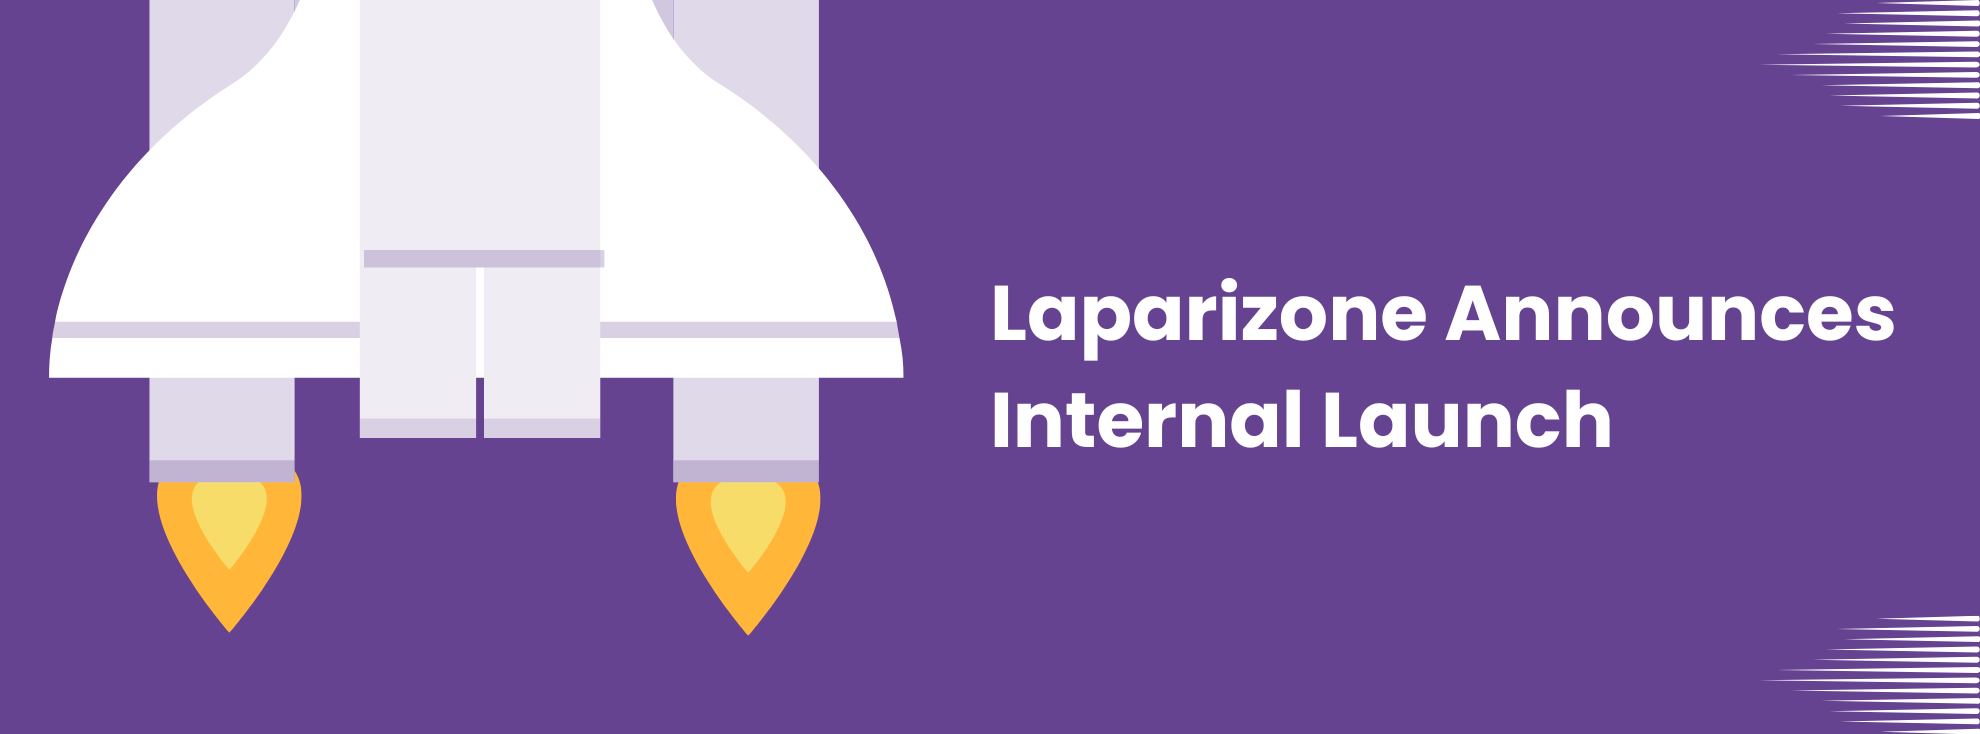 Laparizone Announces Internal Launch